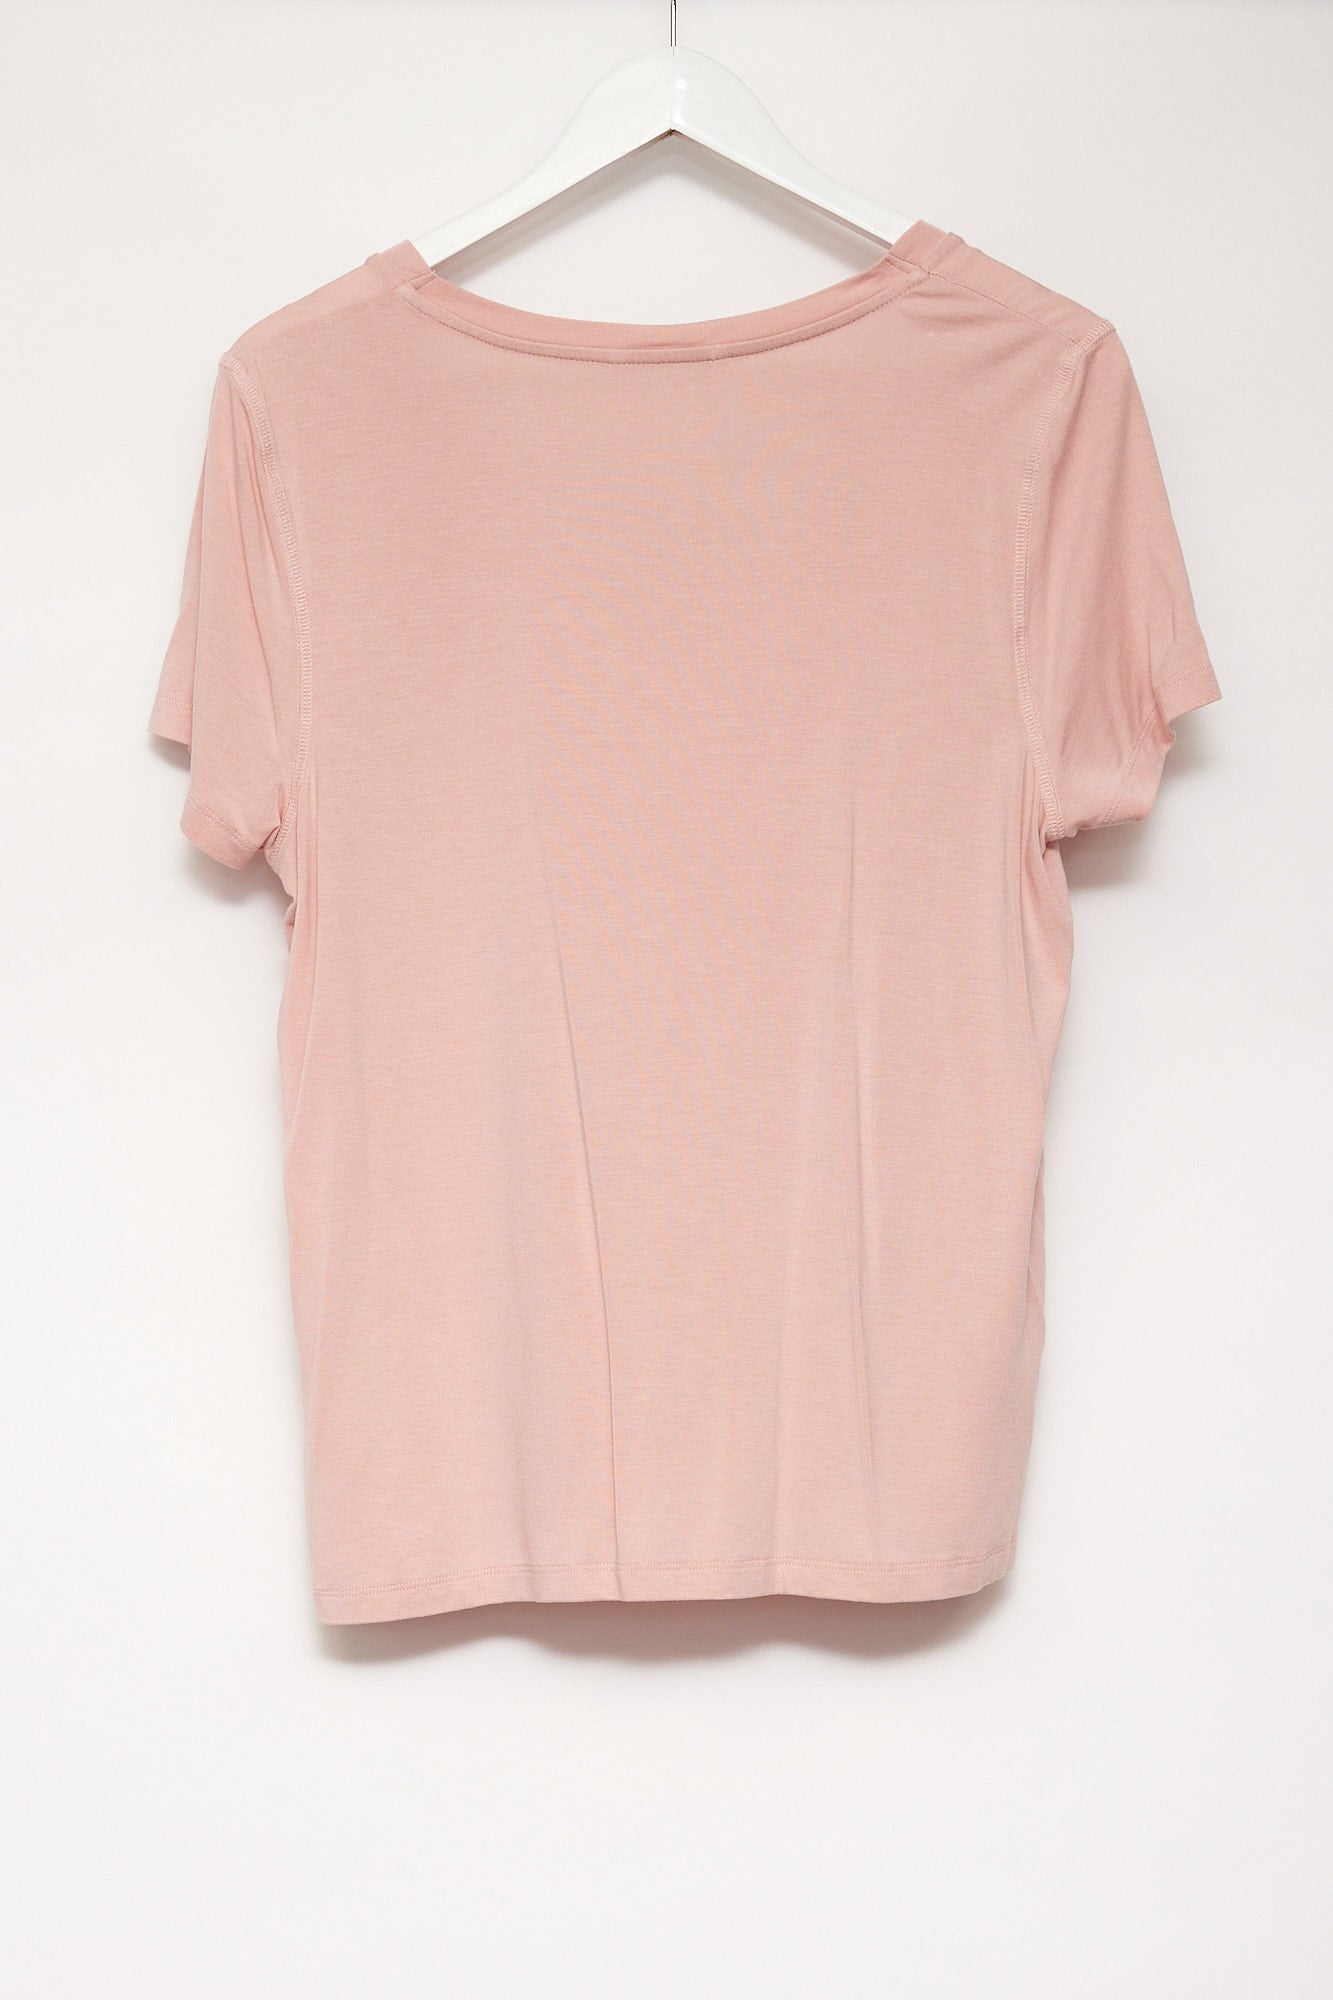 Womens TU Pink T-shirt: Size Medium